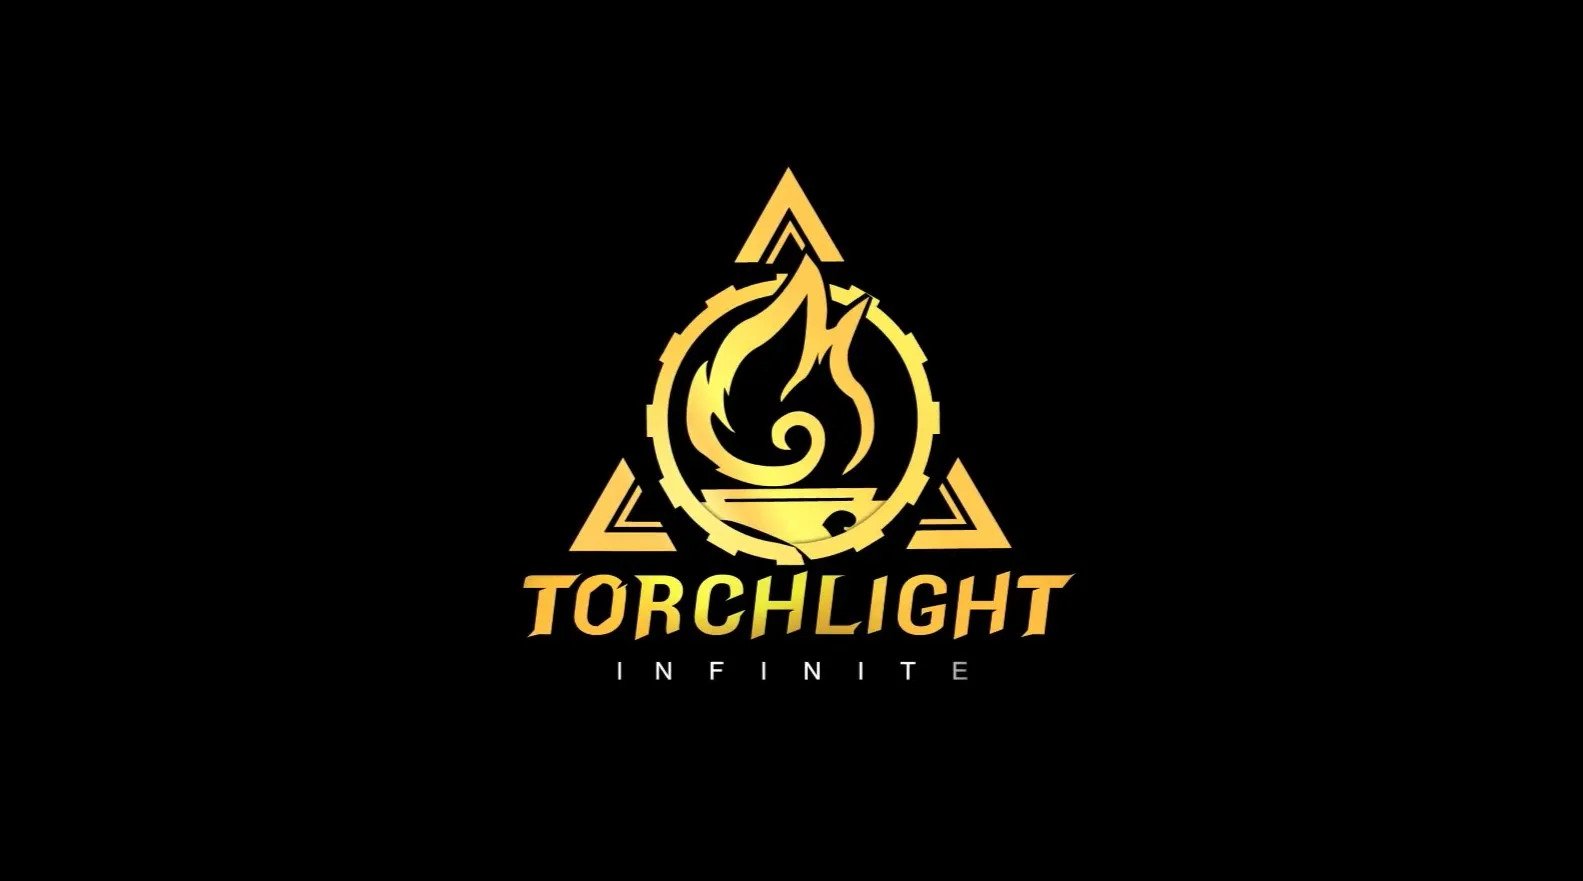 Torchlight infinite logo